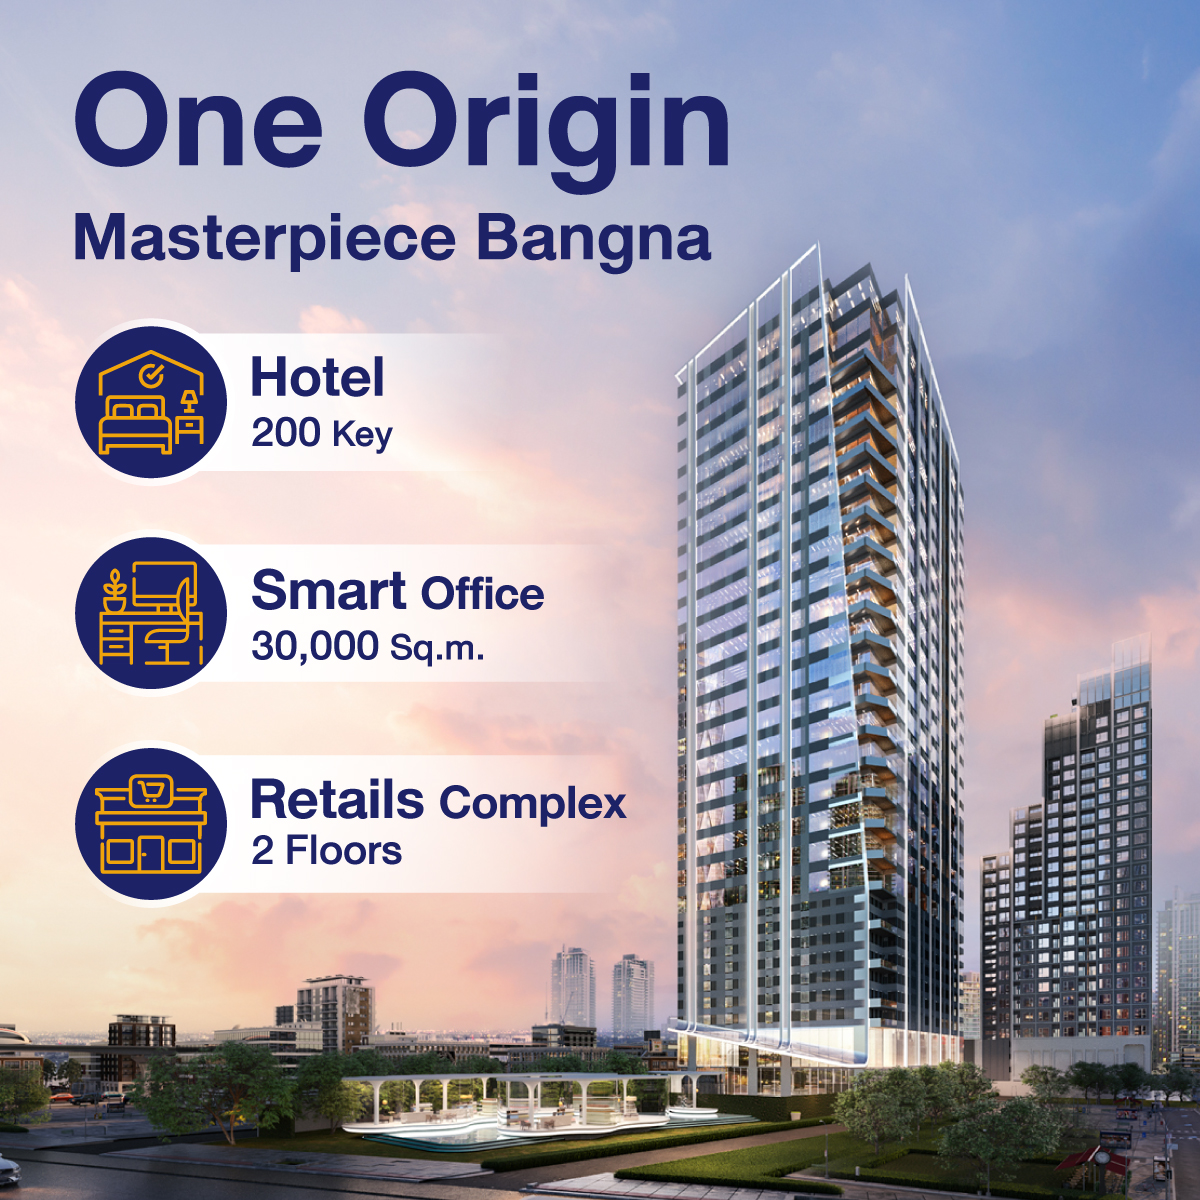 2⃣ One Origin Masterpiece Bangna